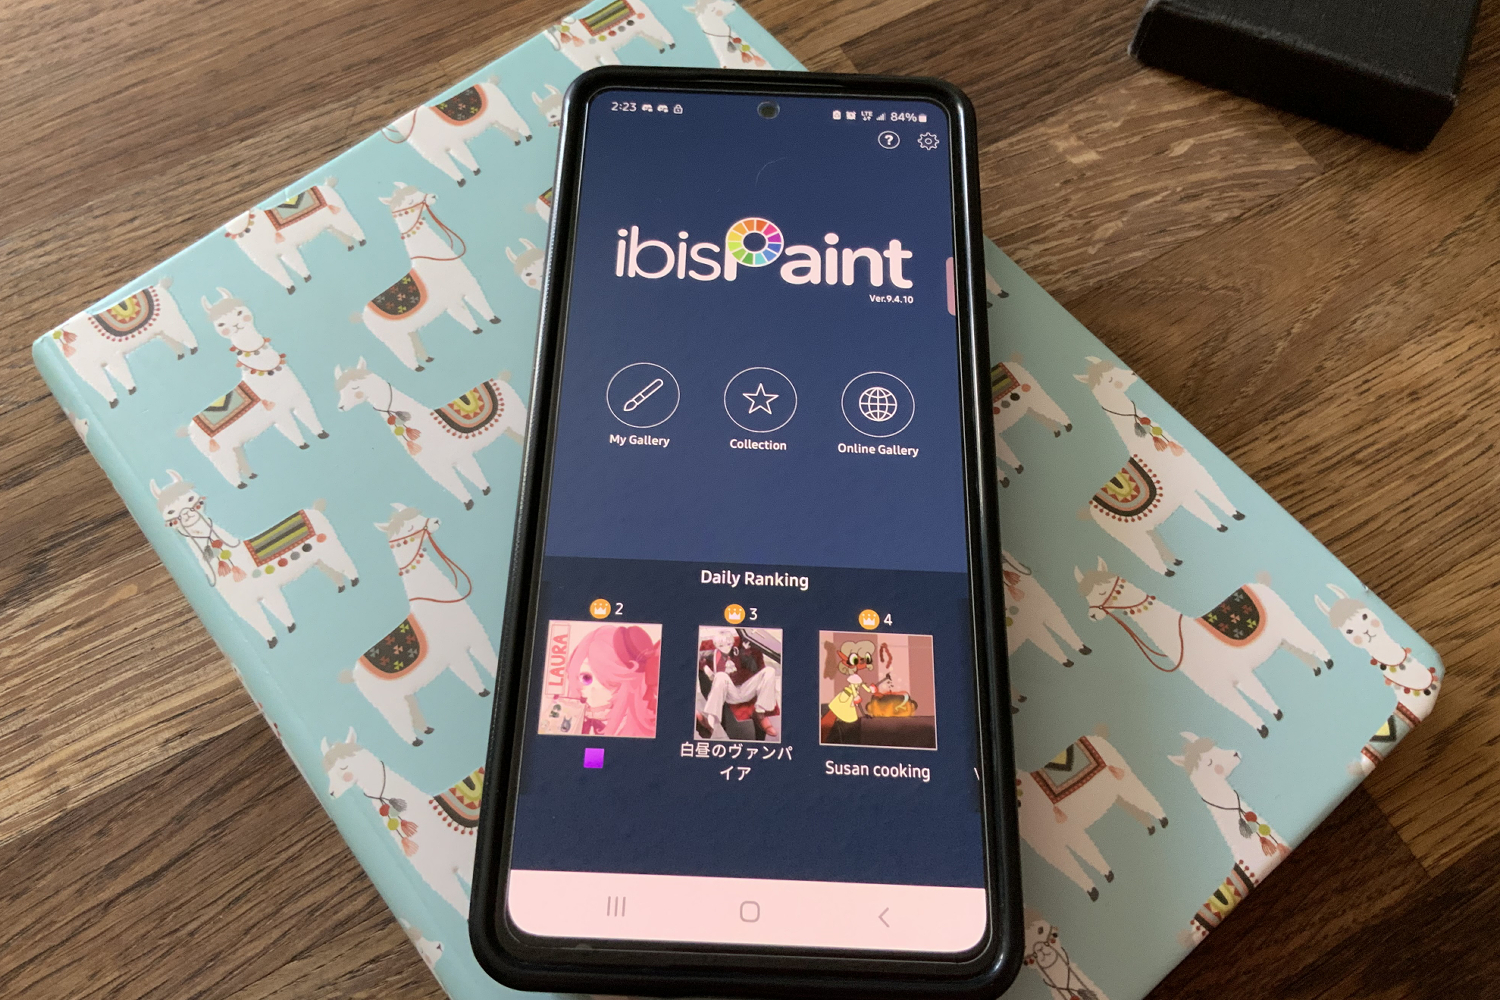 The phone displays the IbisPaint art program on the screen.